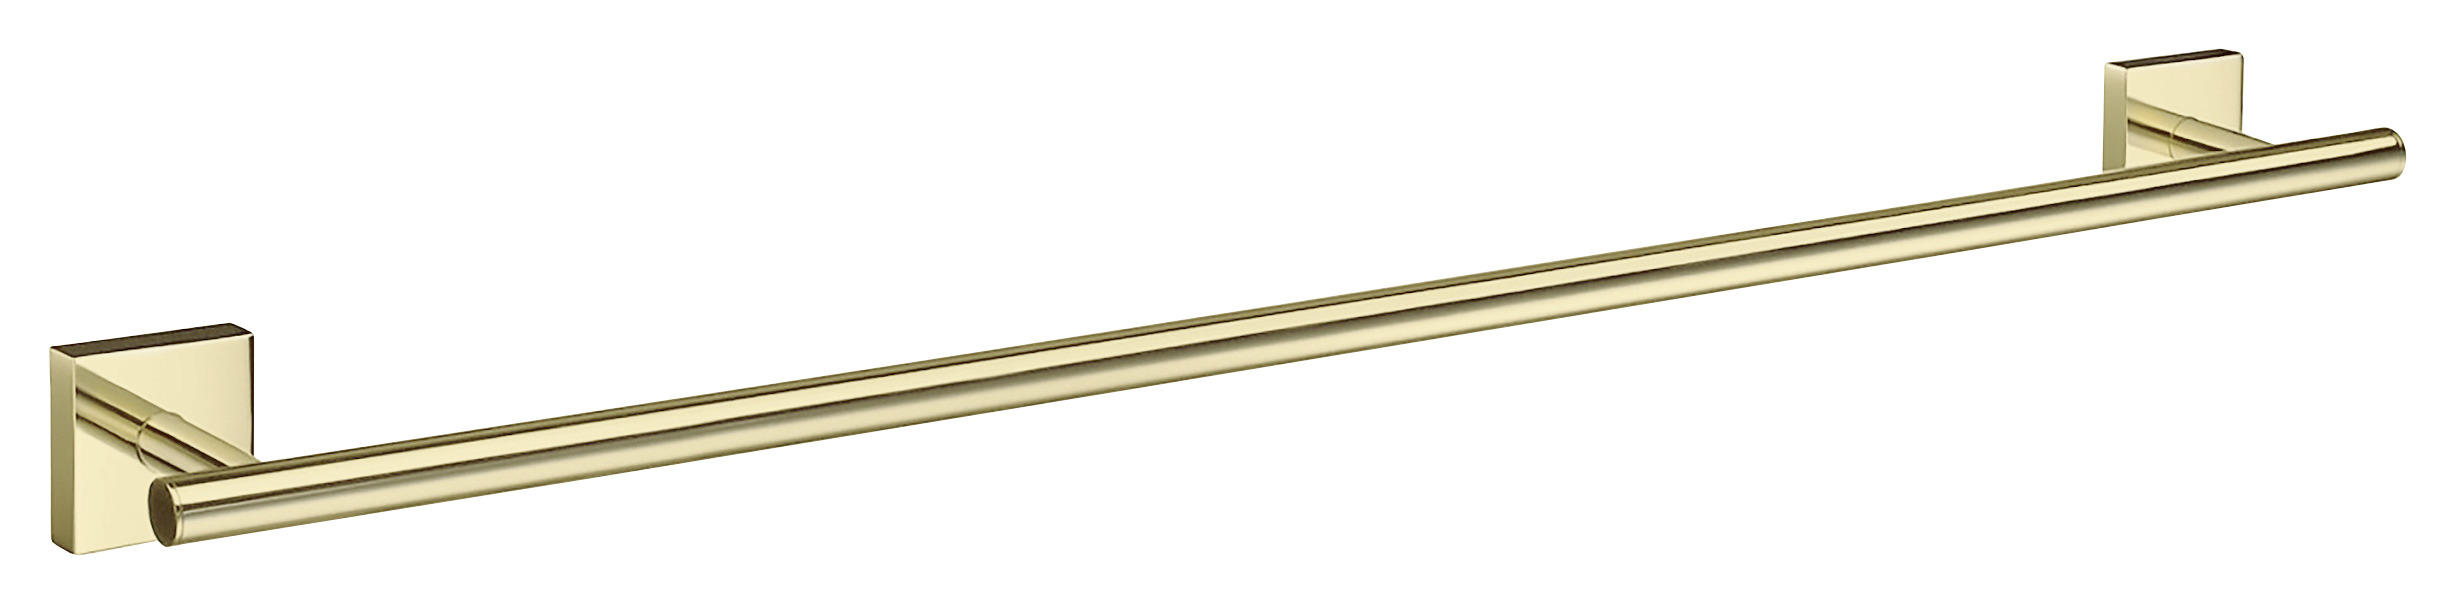 HANDTUCHSTANGE Goldfarben  - Goldfarben, Basics, Metall (64,8/4,5/6,7cm) - Smedbo